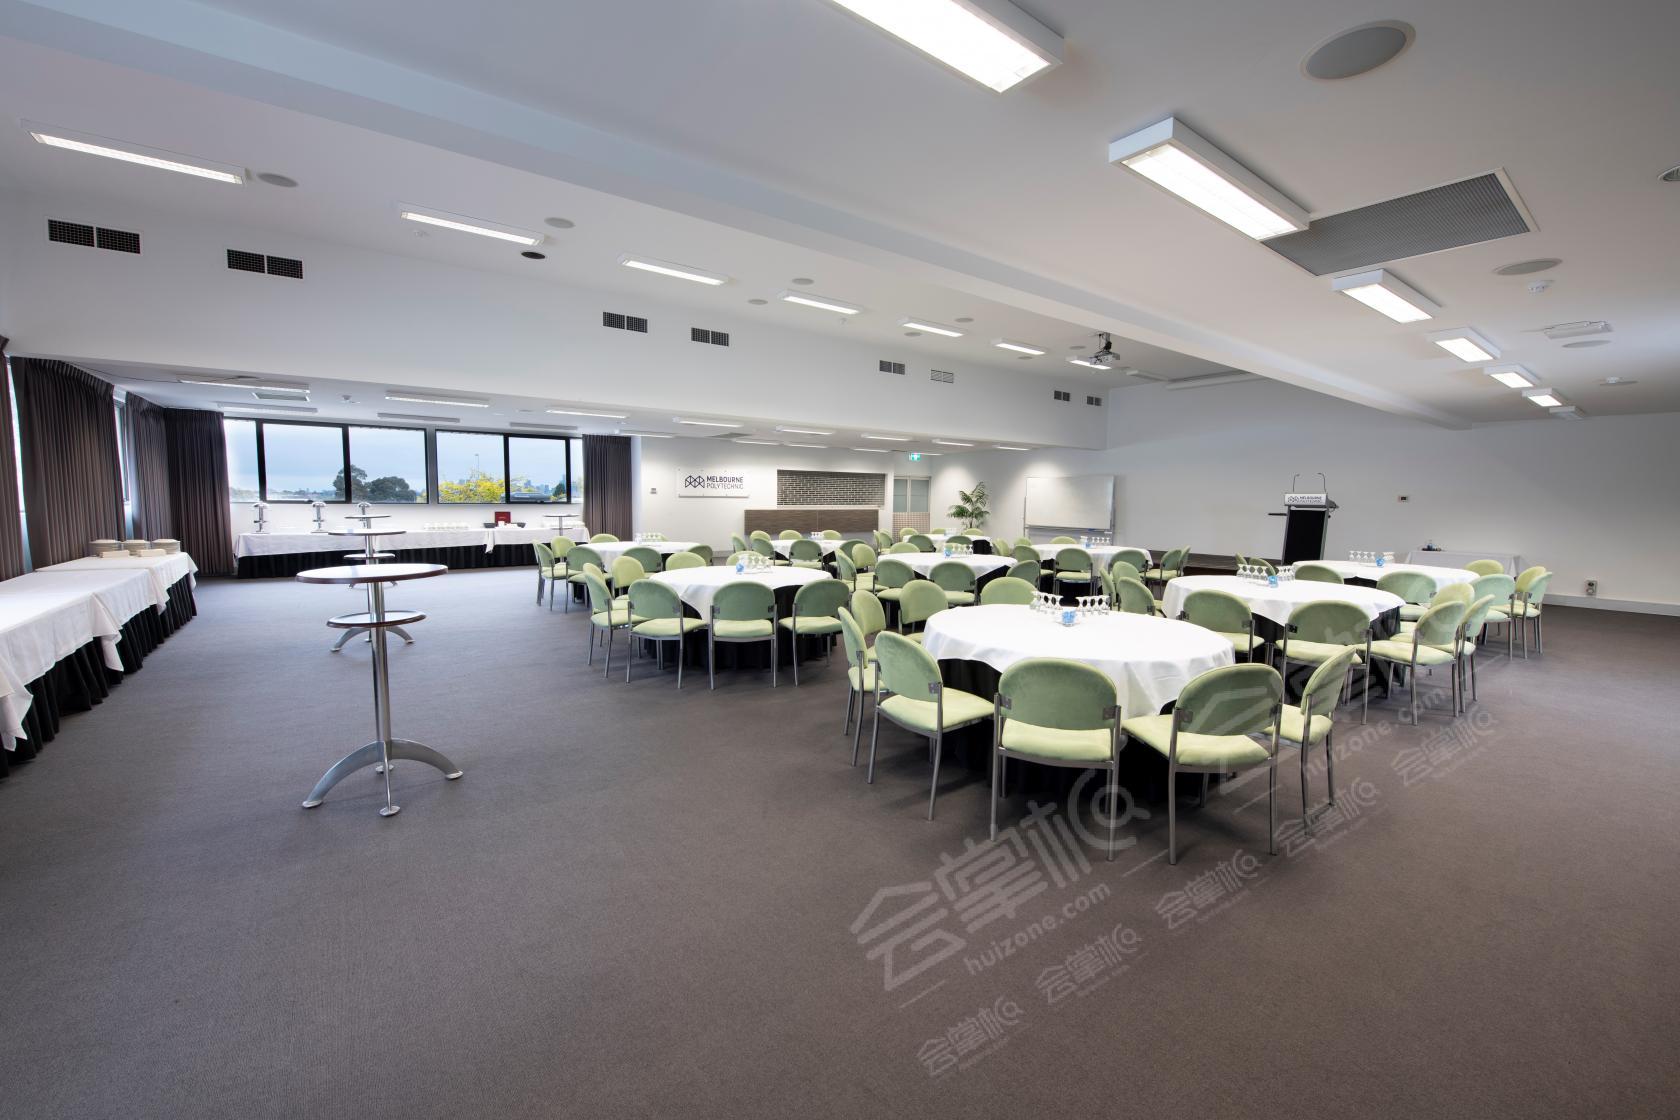 Melbourne Polytechnic Conference Centre